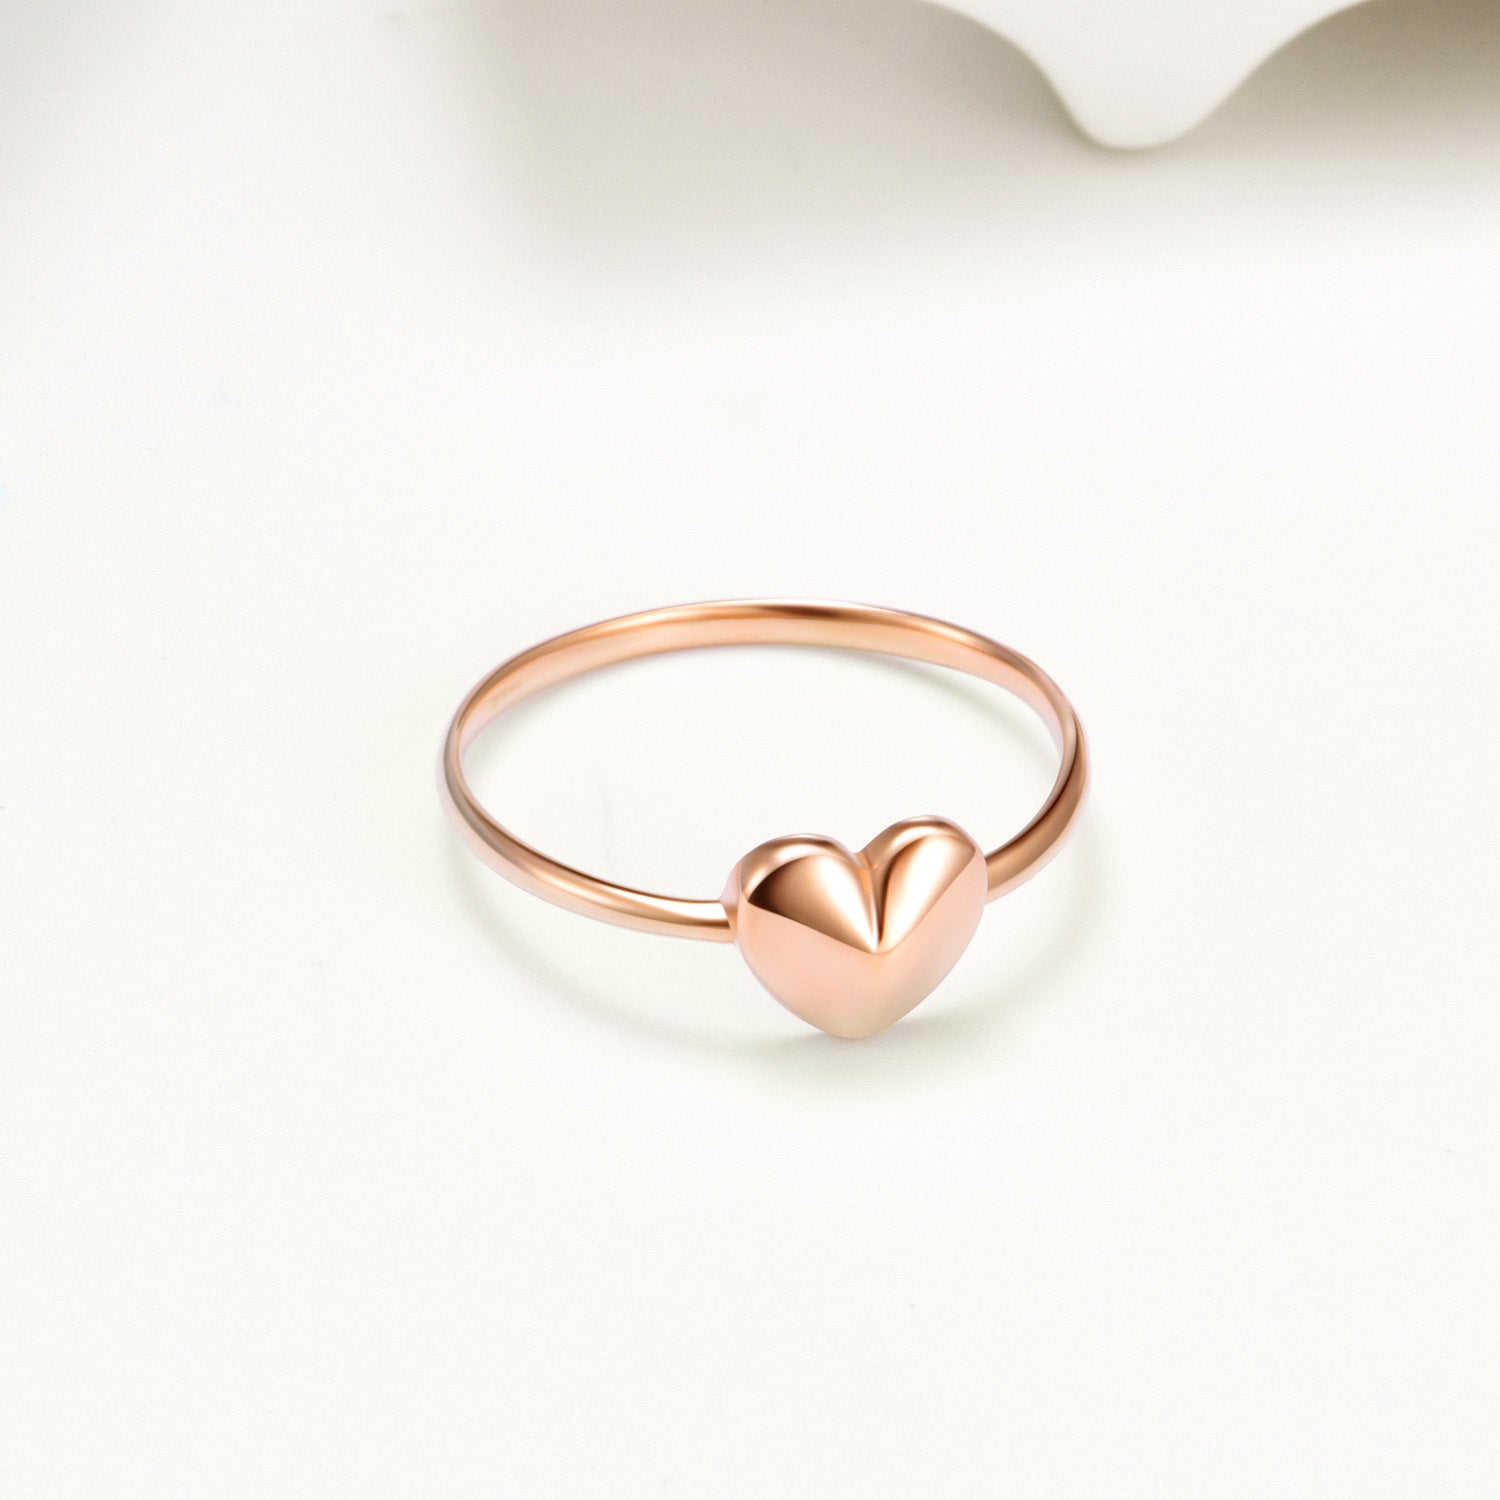 18K Gold Fashion Single Heart Rose Gold Ring Cute Korean Heart-Shaped Jewelry